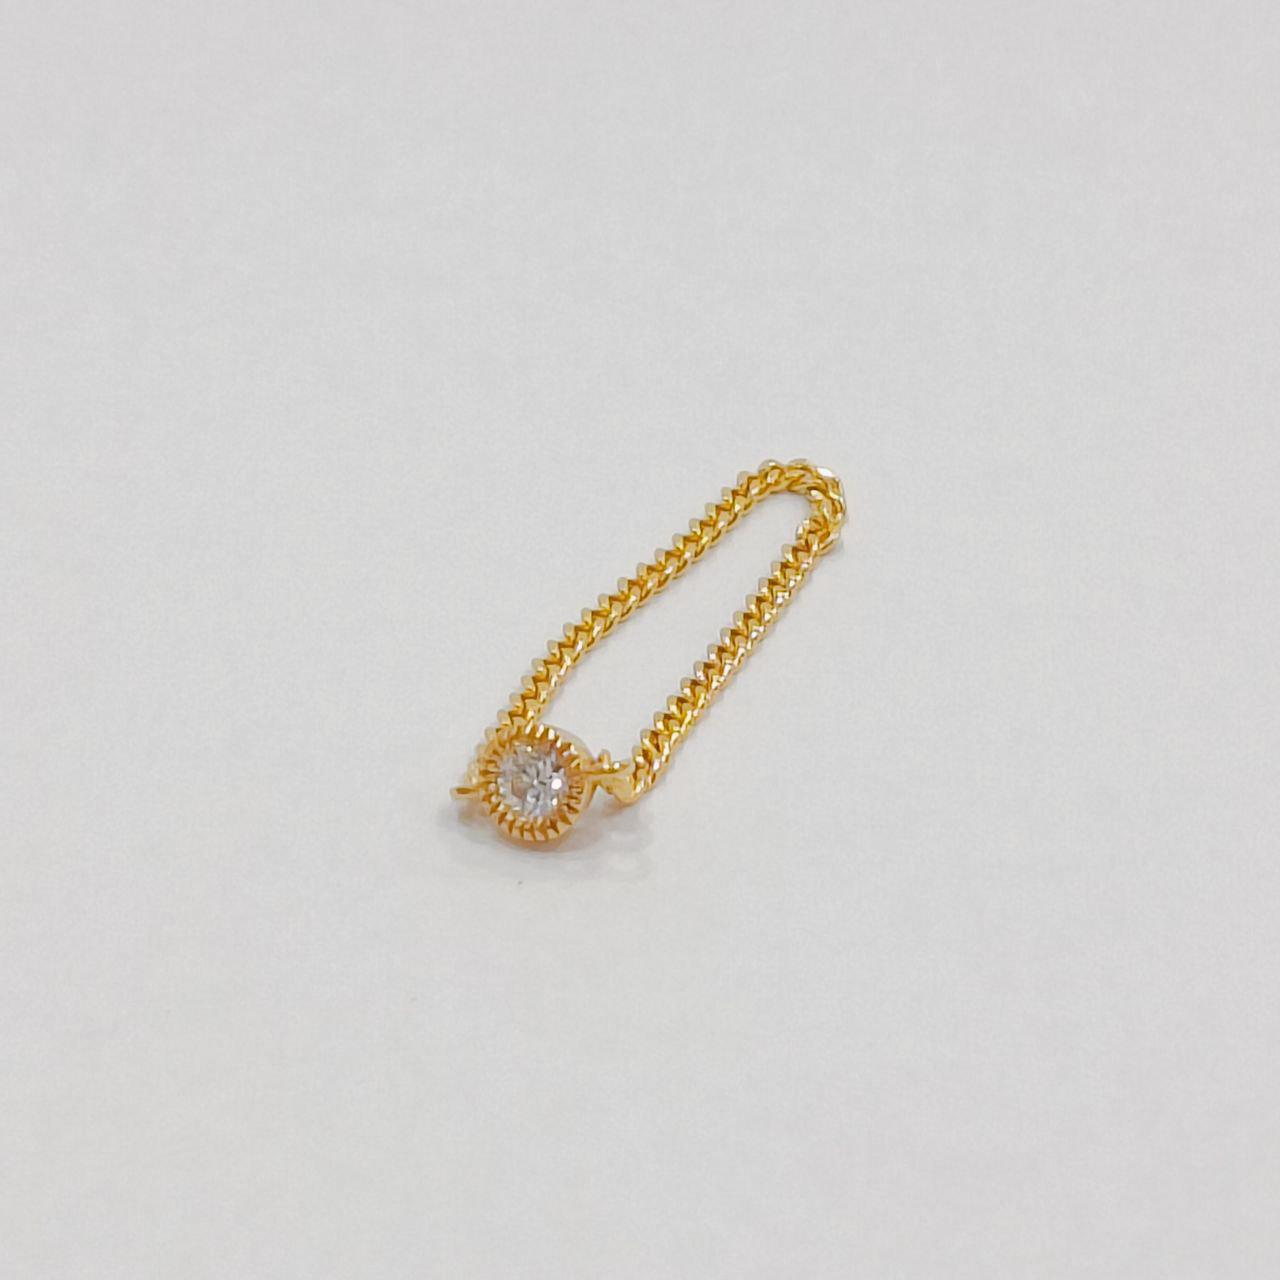 22k / 916 Gold Chain Diamond Ring-916 gold-Best Gold Shop